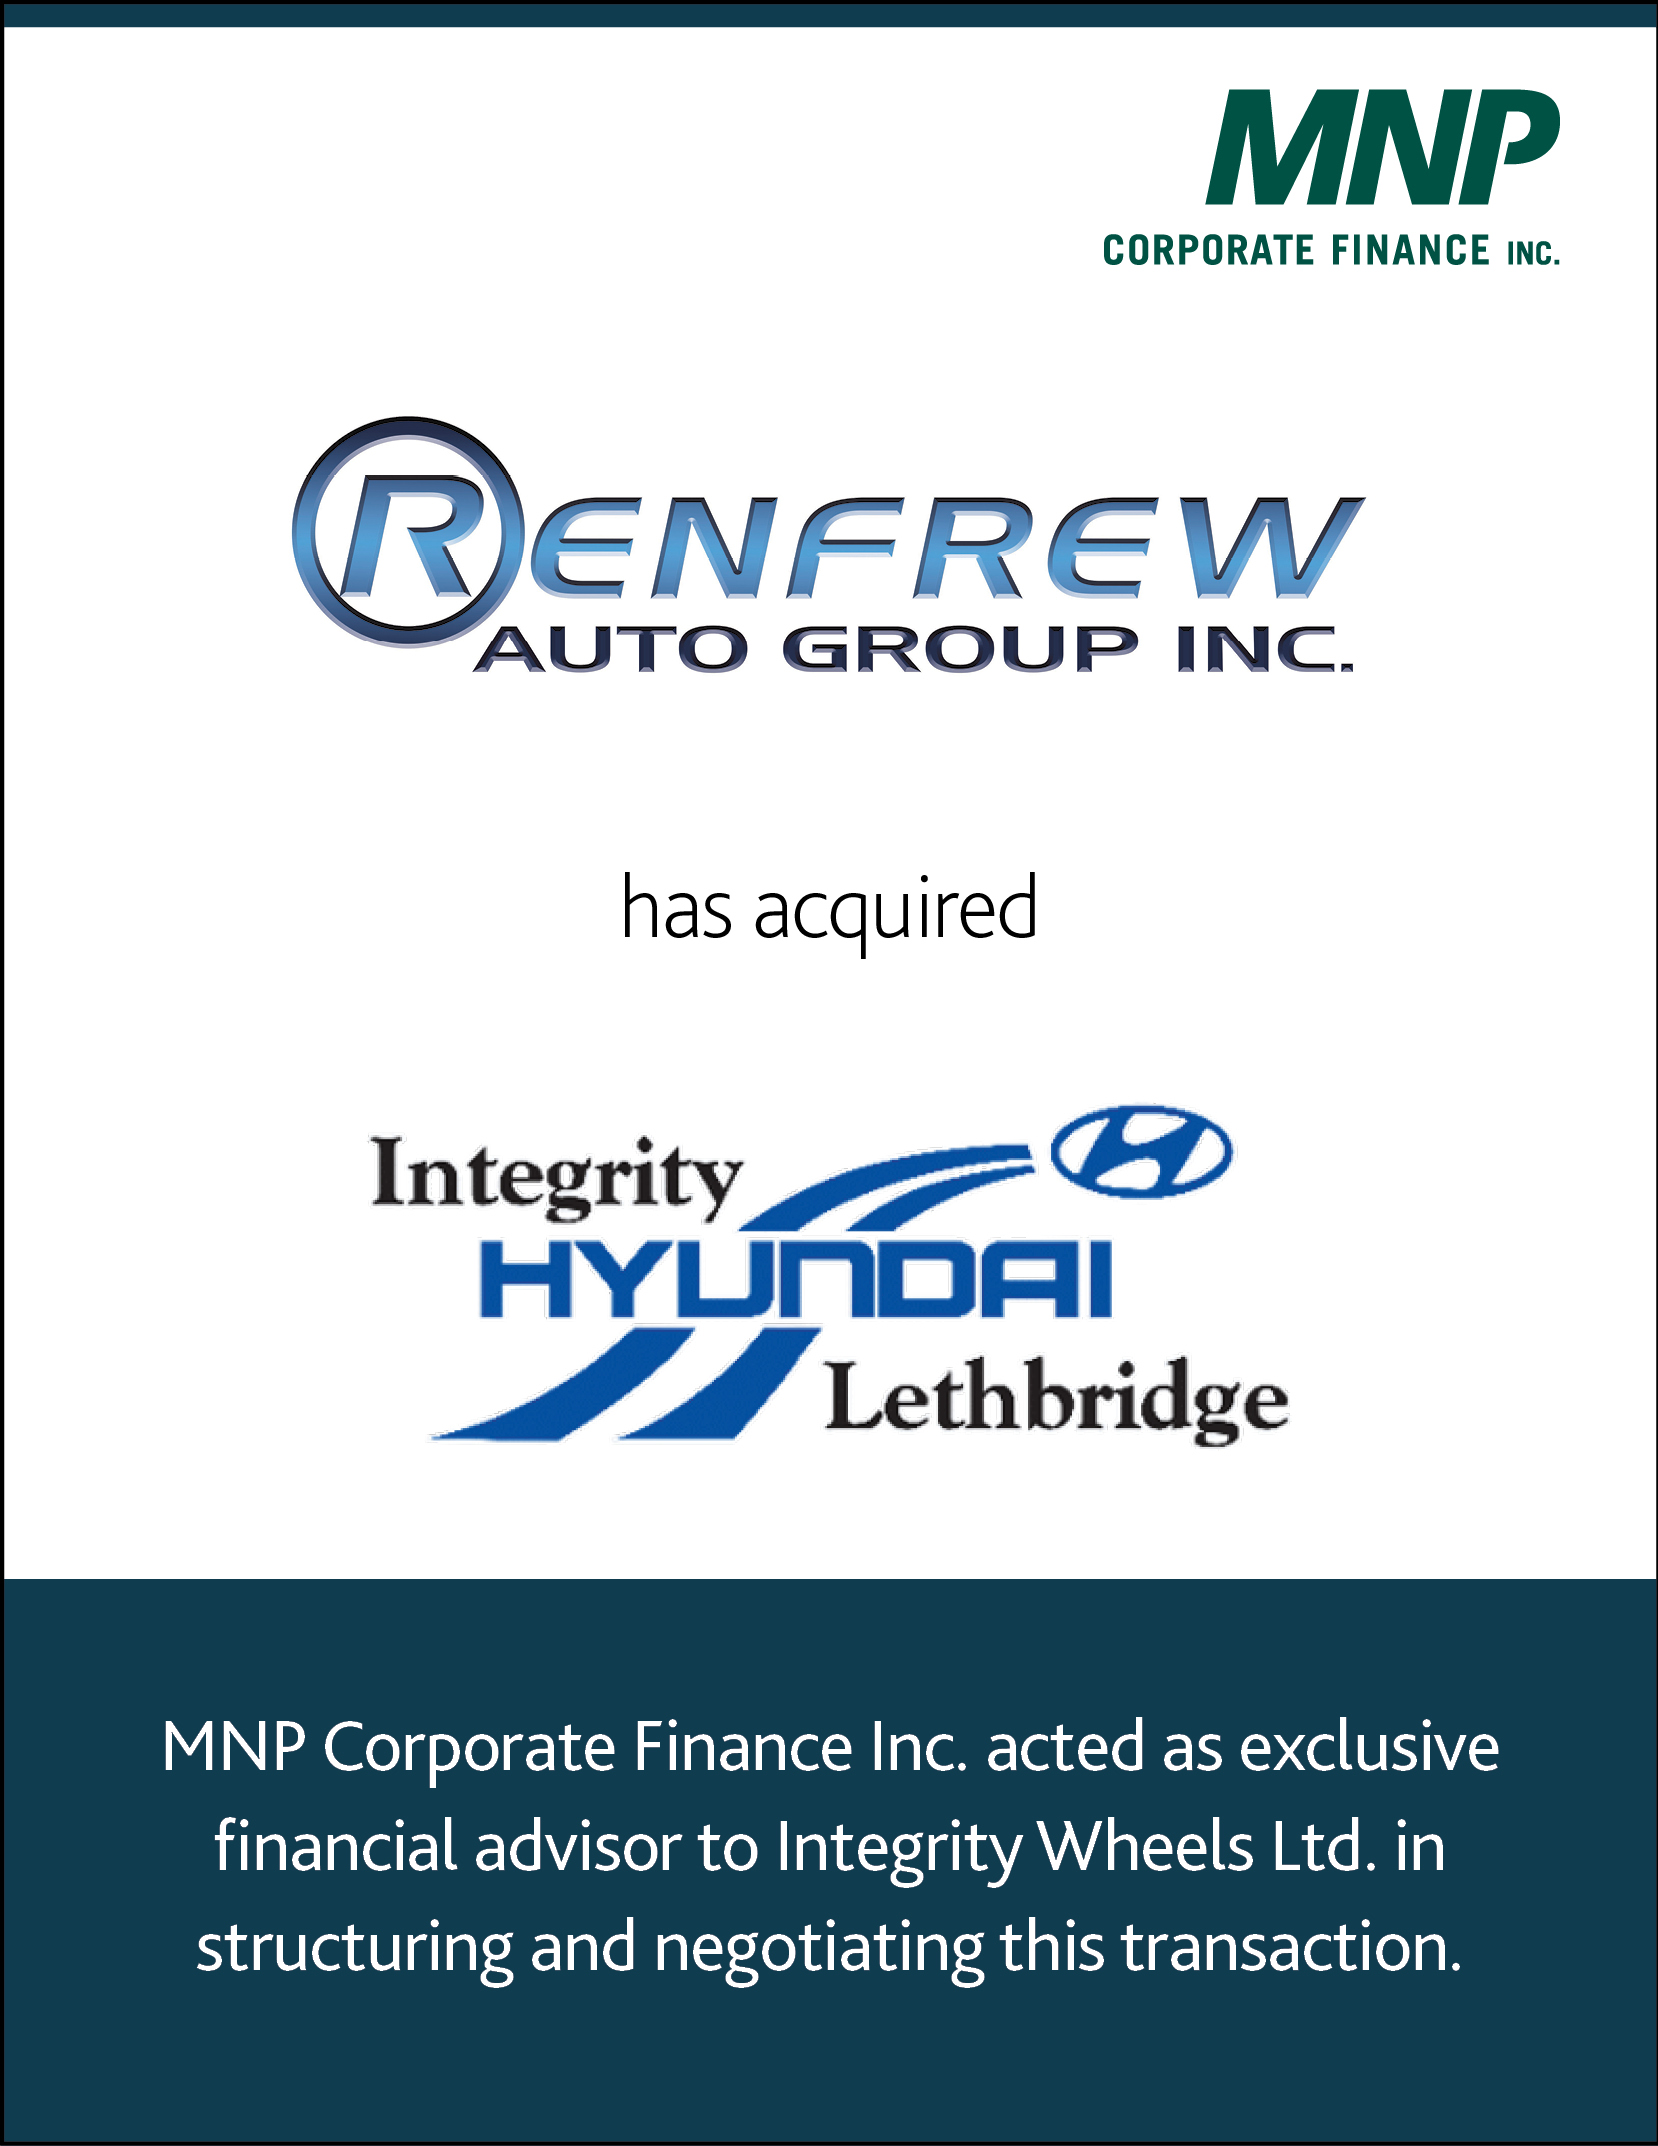 Renfrew Auto Group Inc has acquired Integrity Hyundai Lethbridge